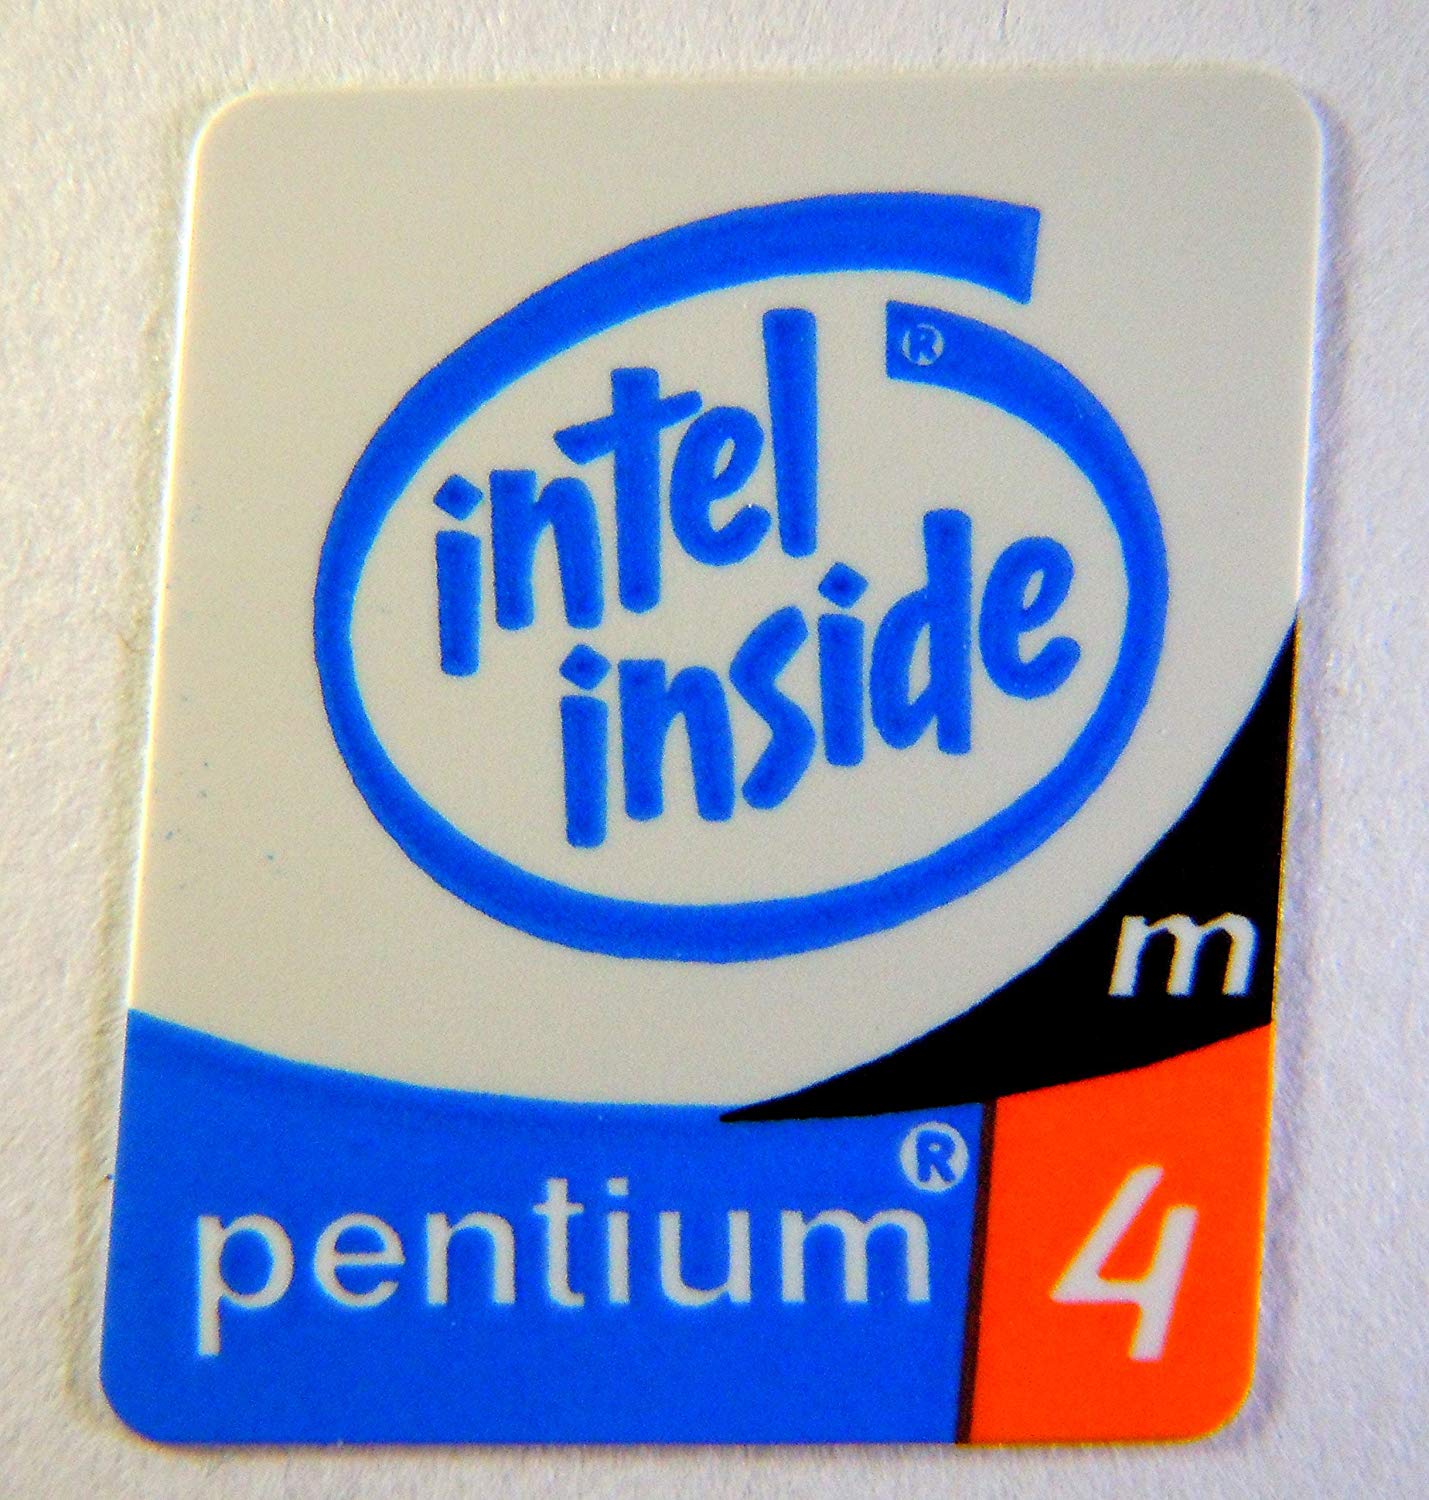 Intel Inside Pentium 4 Logo - Original Intel Inside Pentium 4M Sticker 15 x 18mm 76